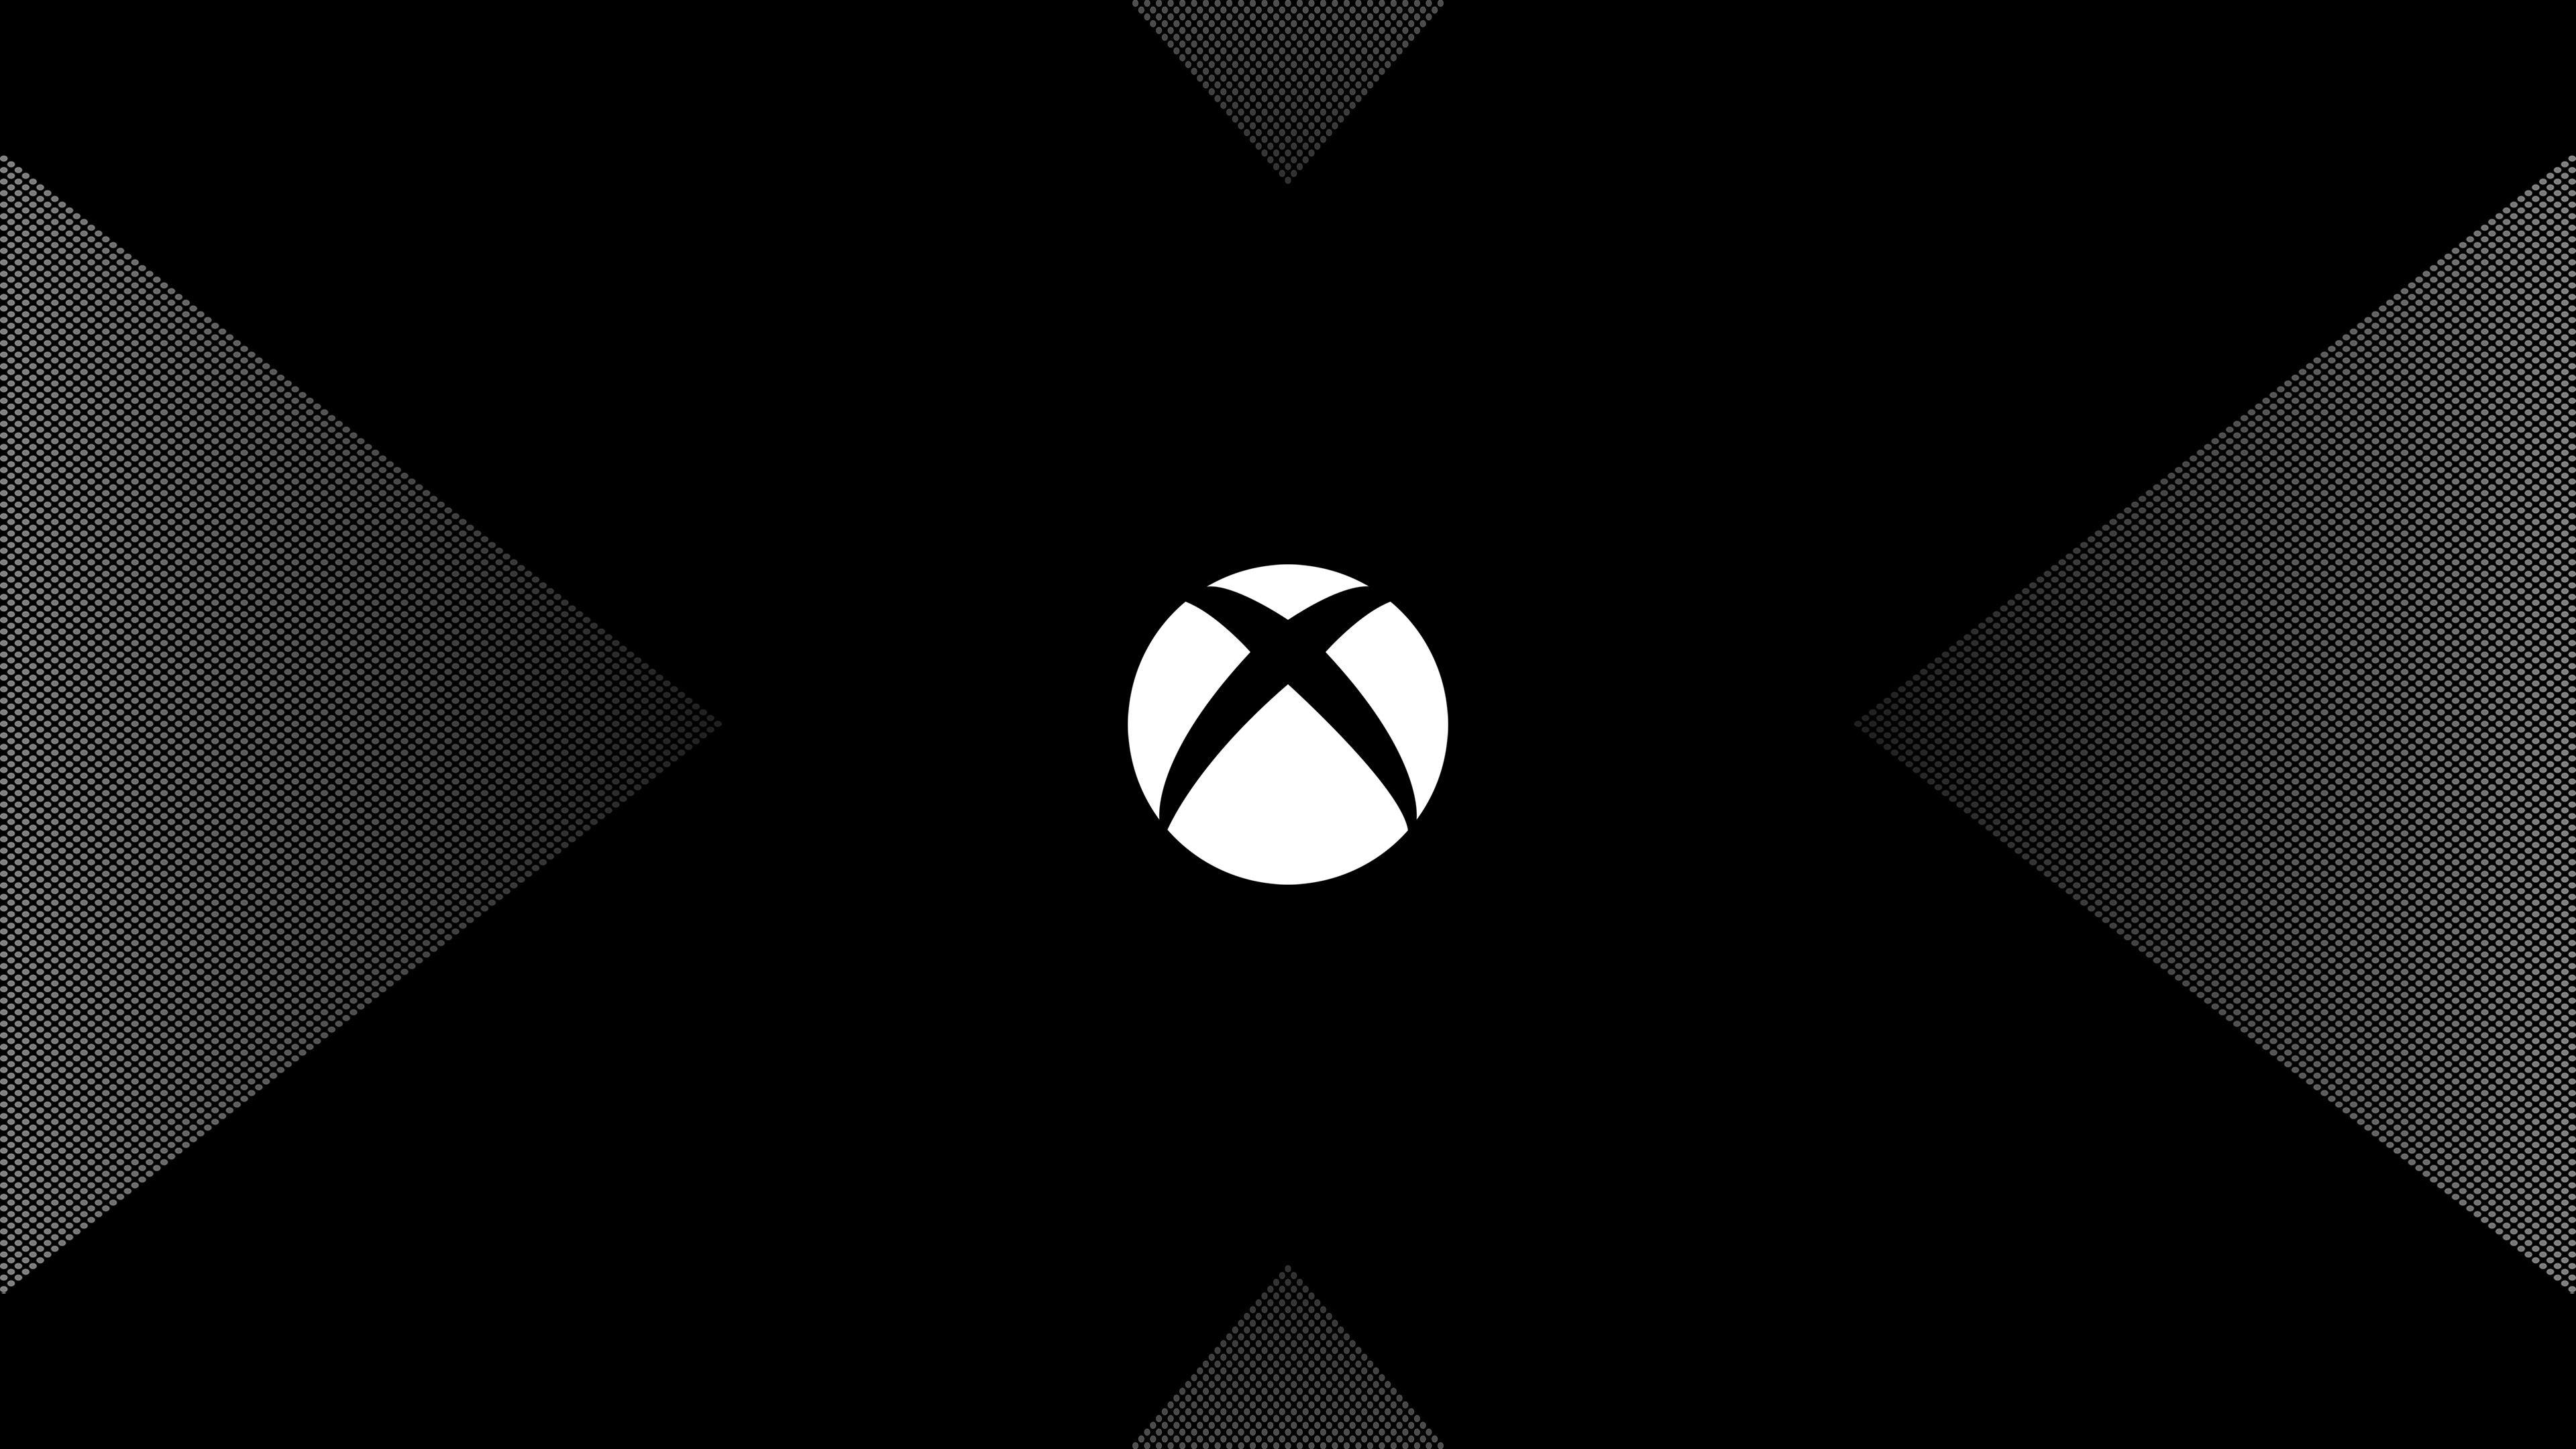 4K-resolution Black and White Logo - Wallpaper Xbox One X, Logo, Dark, Minimal, HD, 4K, Games